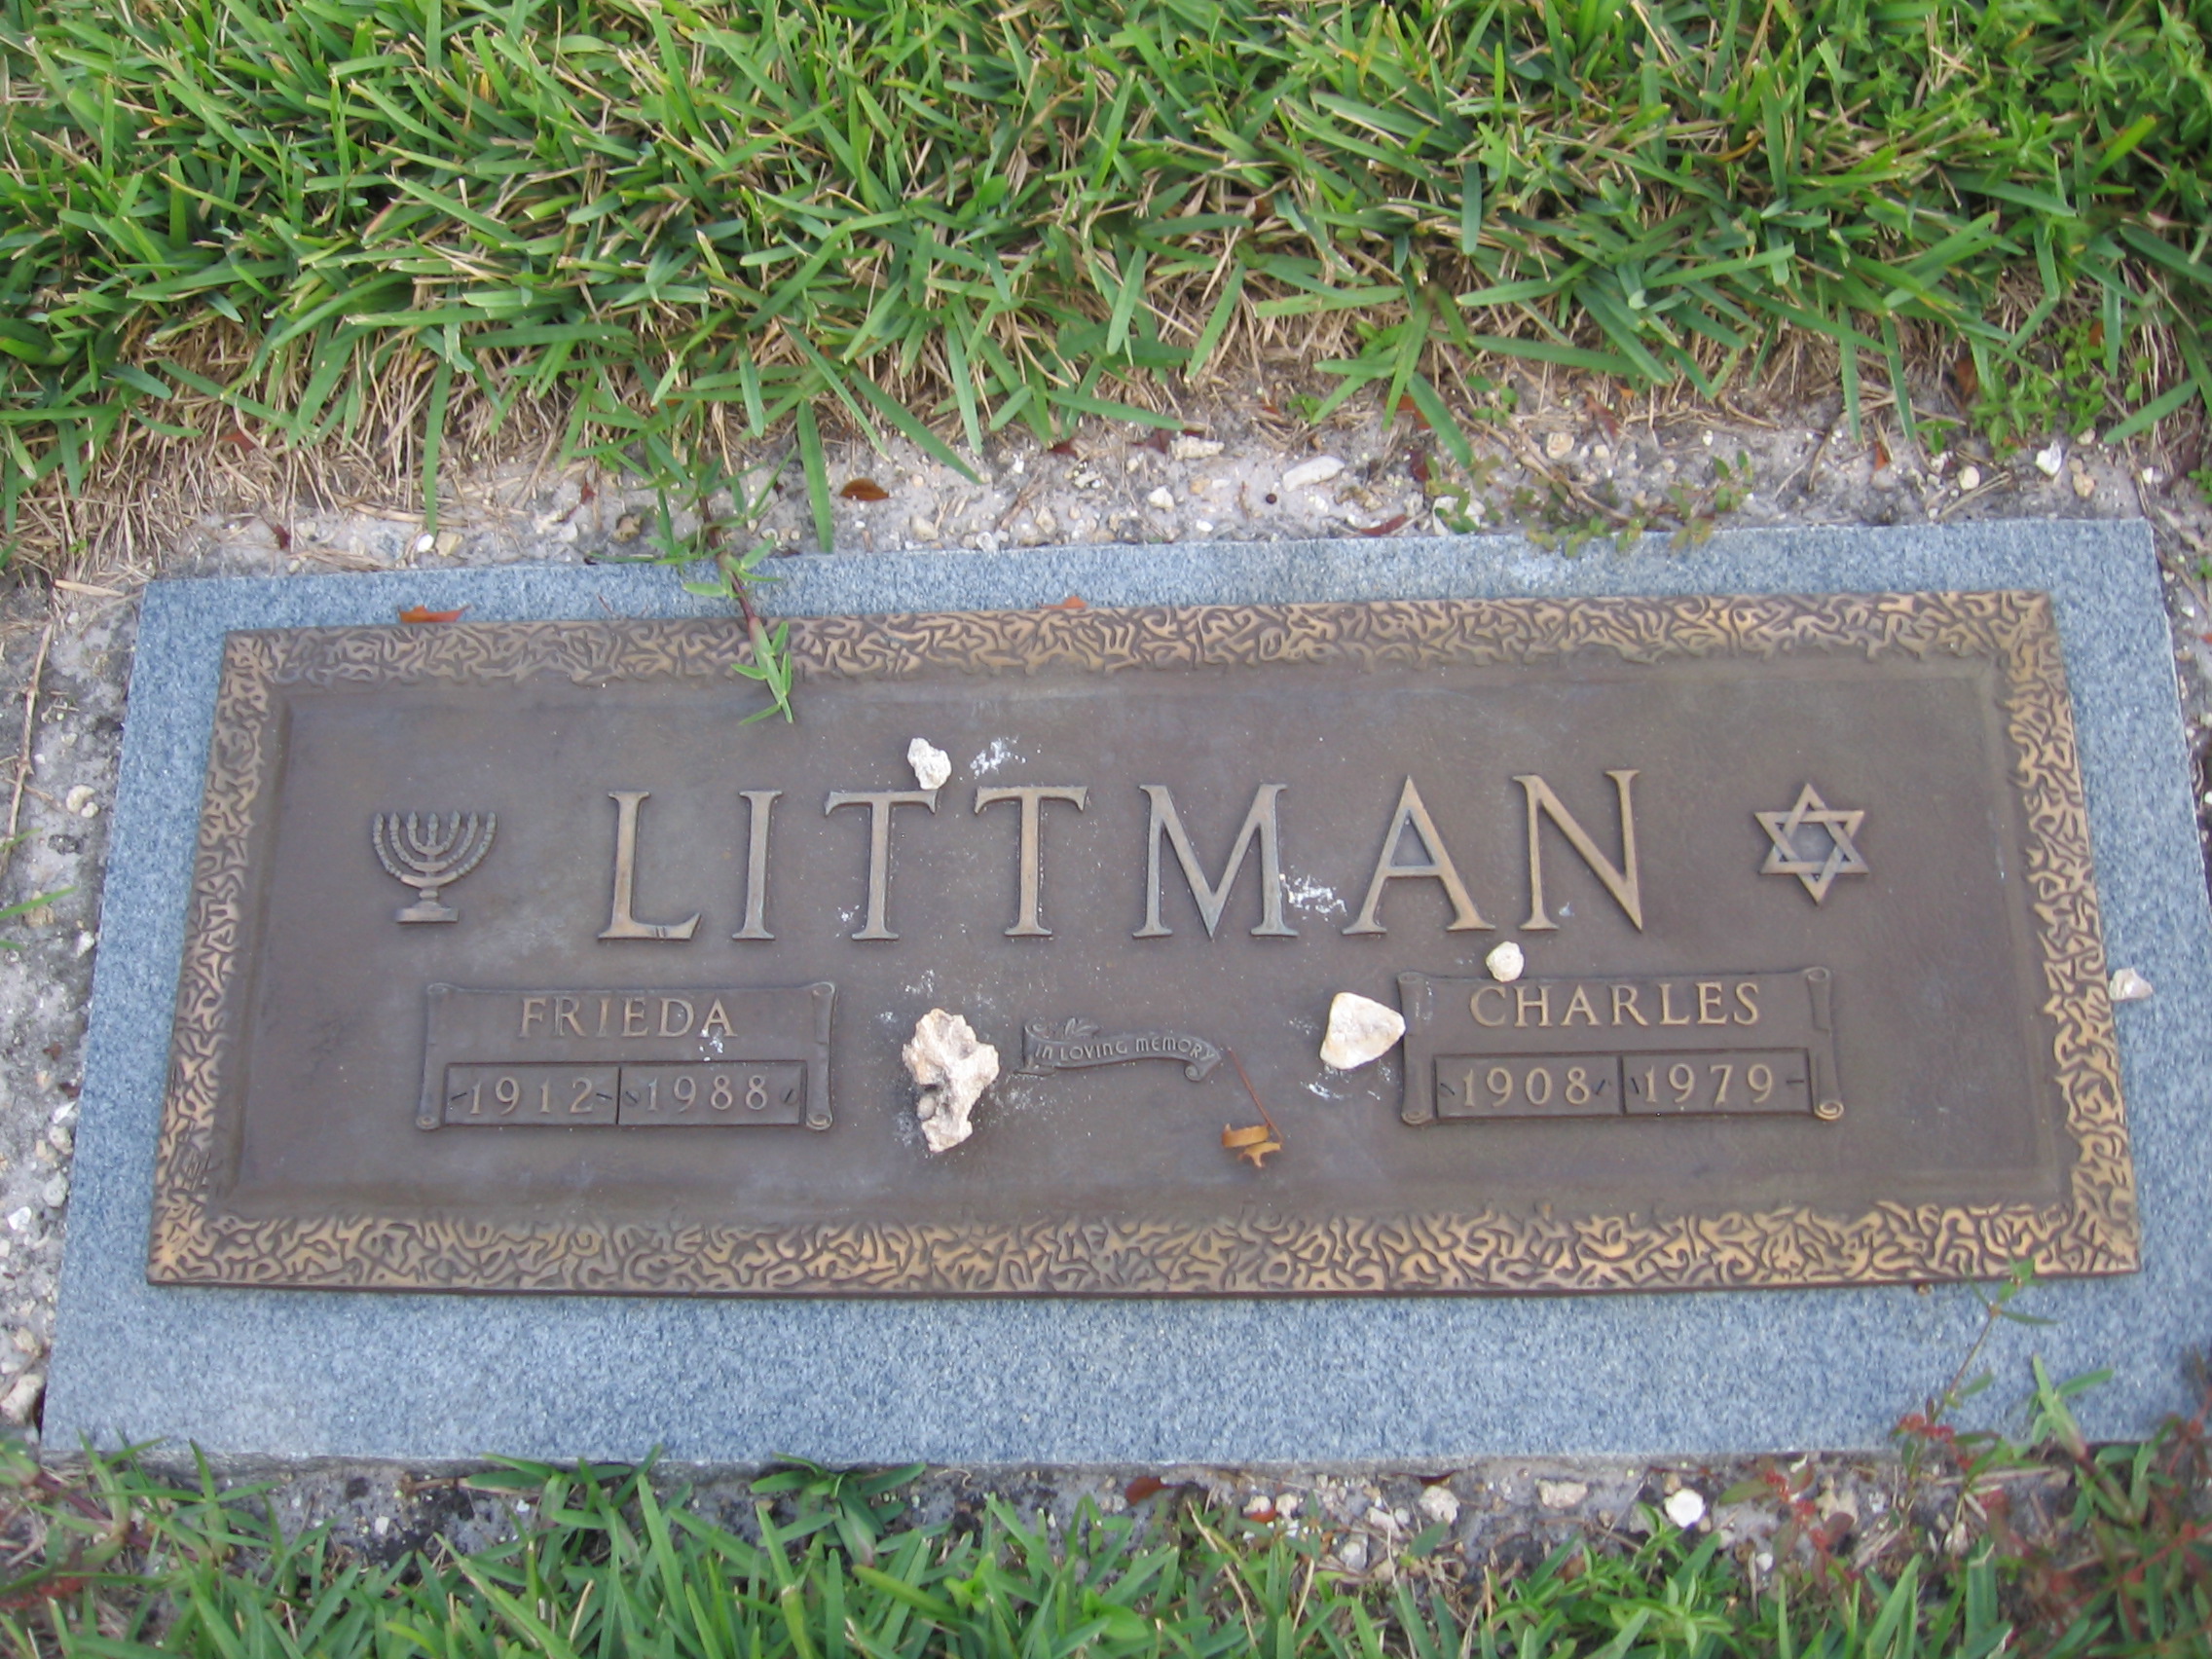 Charles Littman